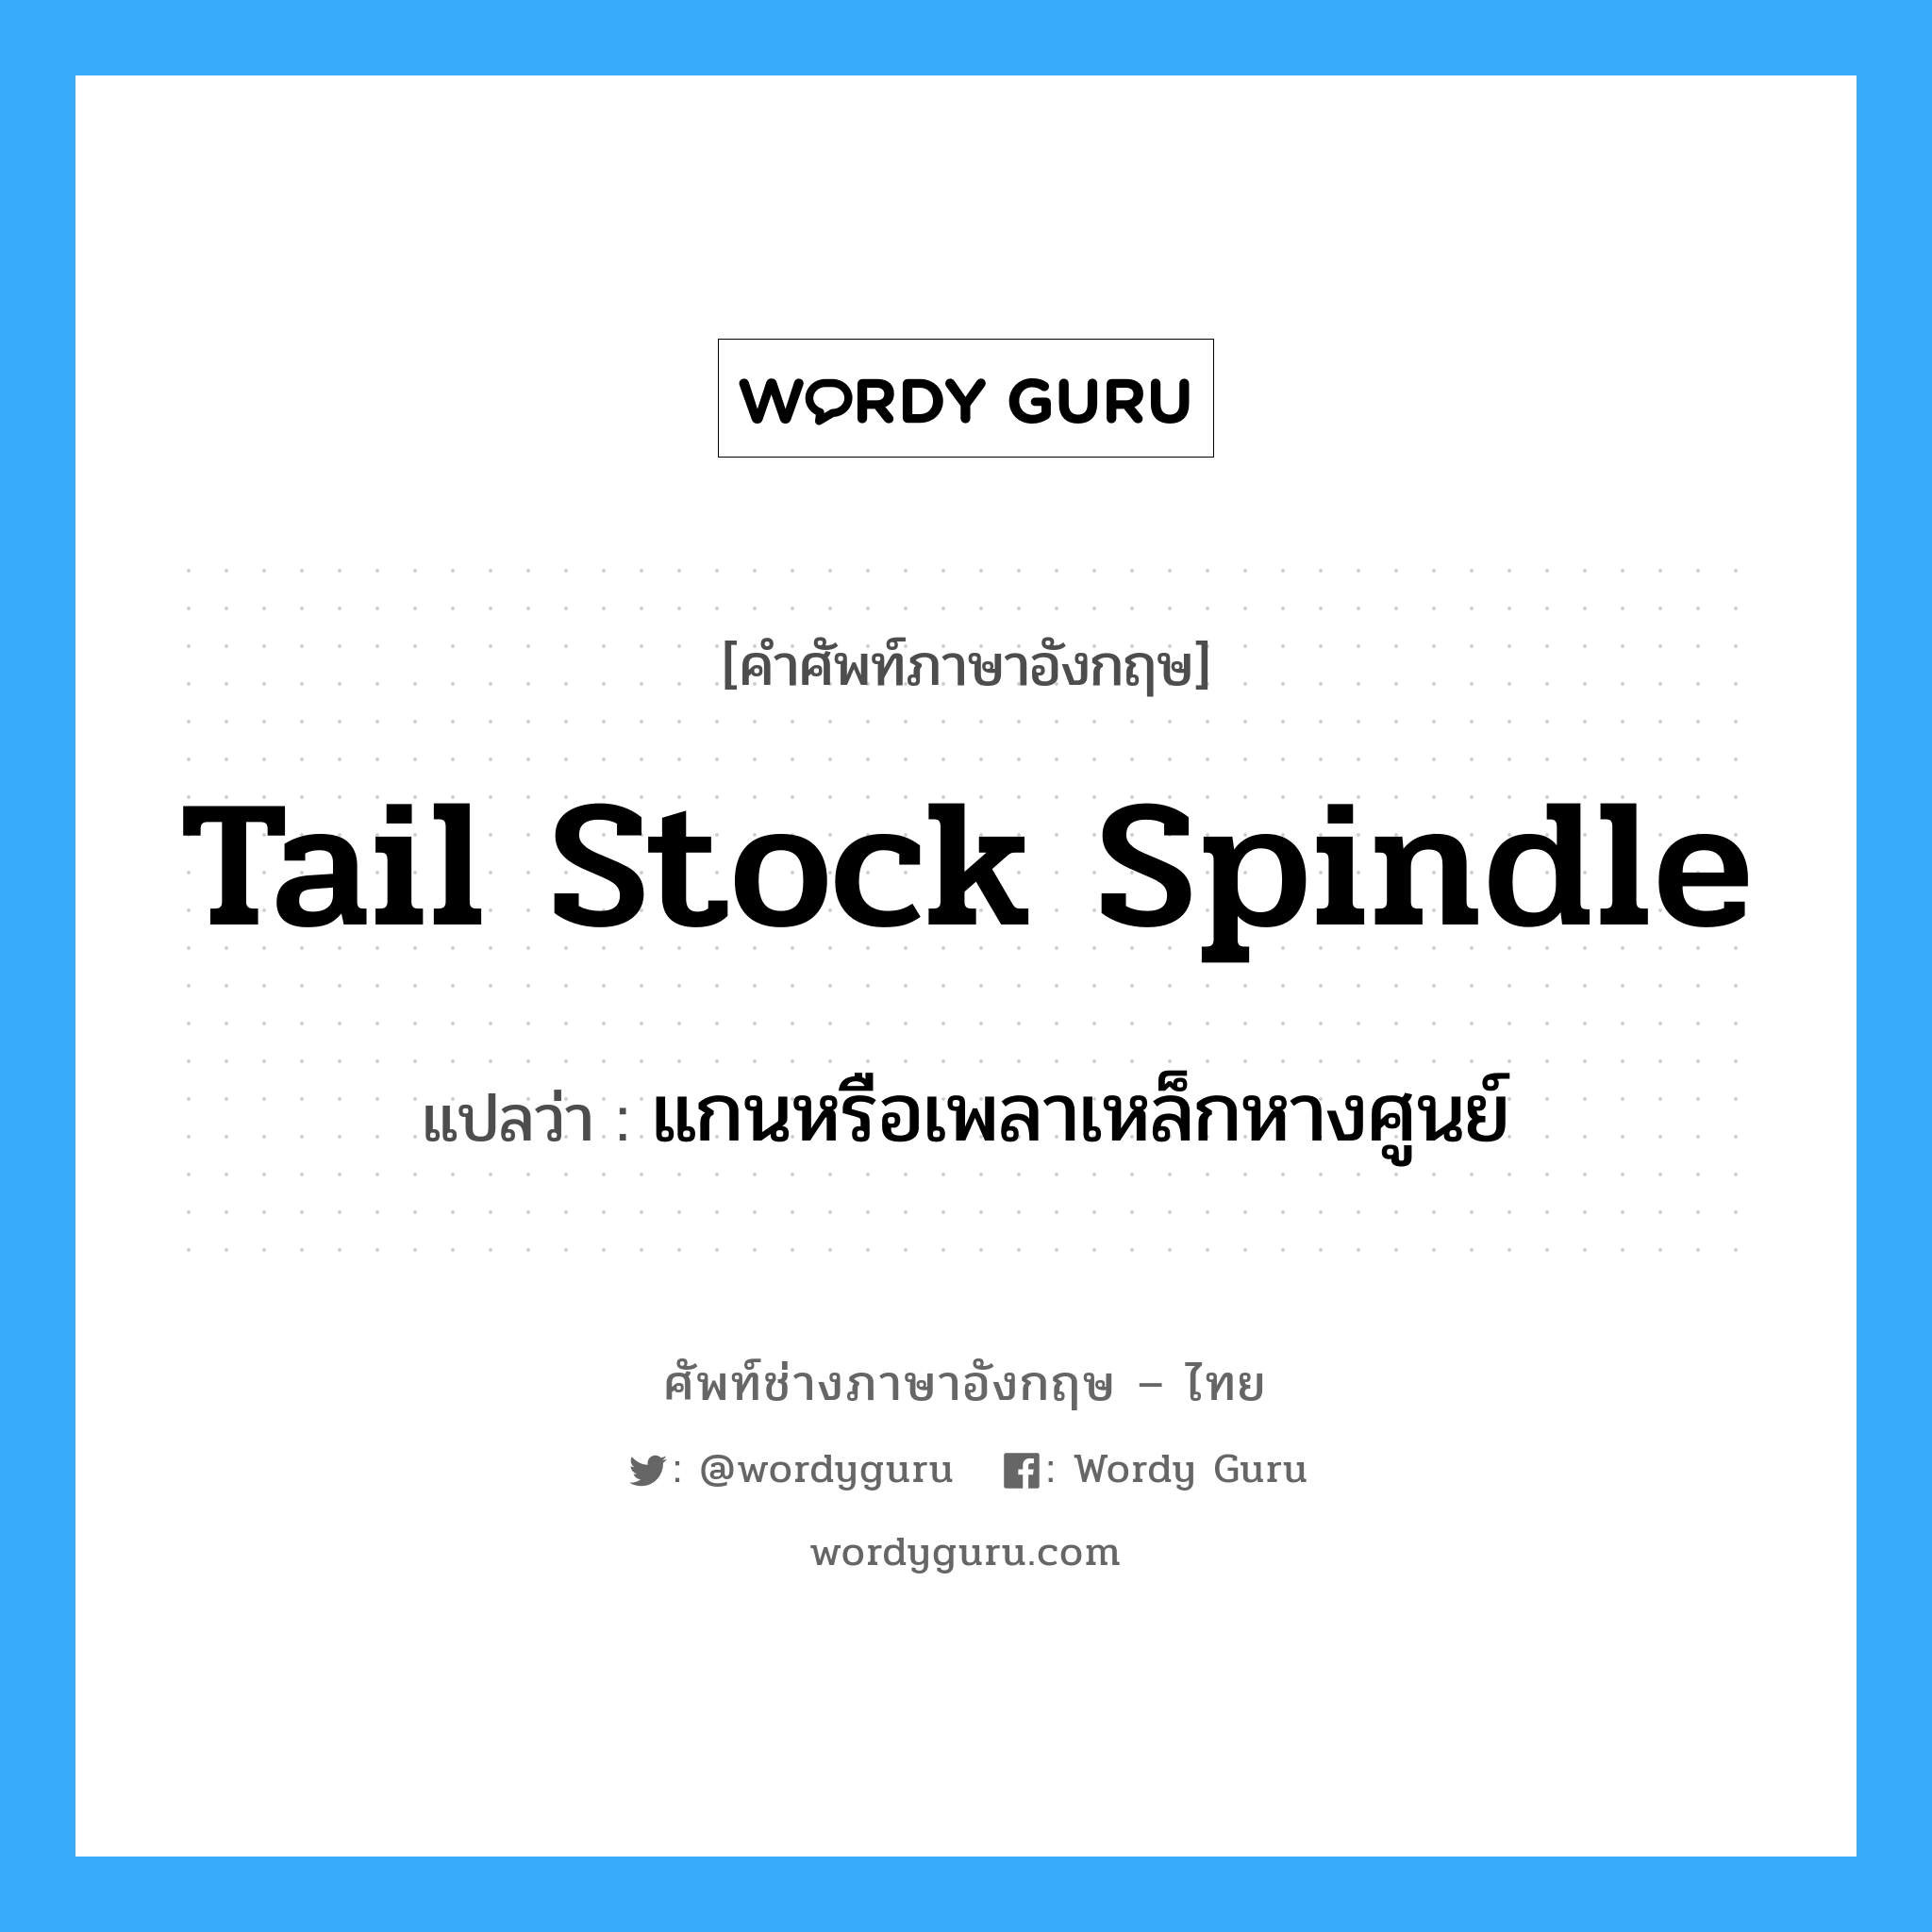 tail stock spindle แปลว่า?, คำศัพท์ช่างภาษาอังกฤษ - ไทย tail stock spindle คำศัพท์ภาษาอังกฤษ tail stock spindle แปลว่า แกนหรือเพลาเหล็กหางศูนย์